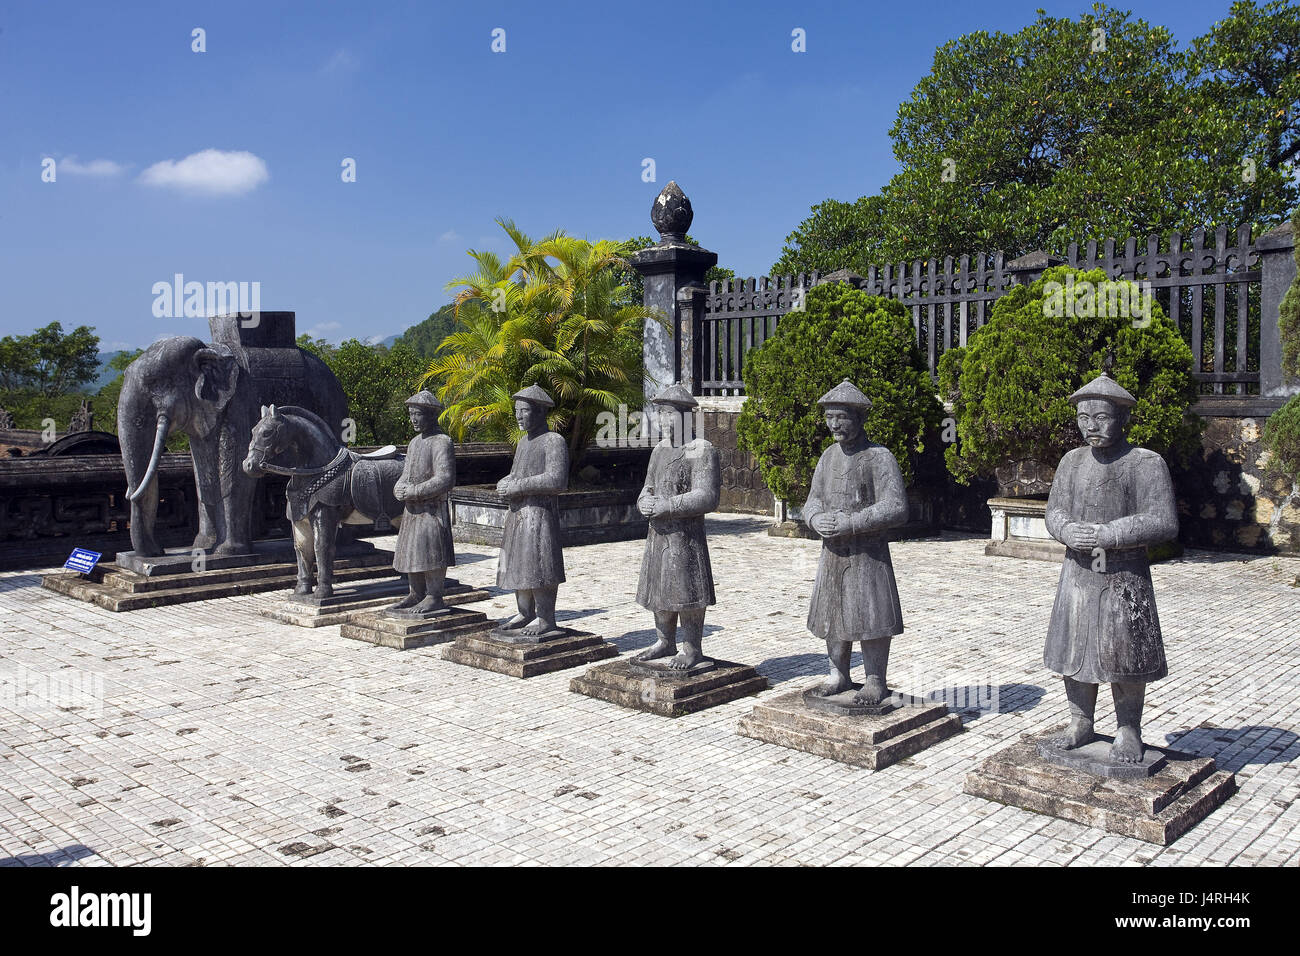 Il Vietnam, Chau Chu, Khai cosa mausoleo Ung lungo, statue, Foto Stock